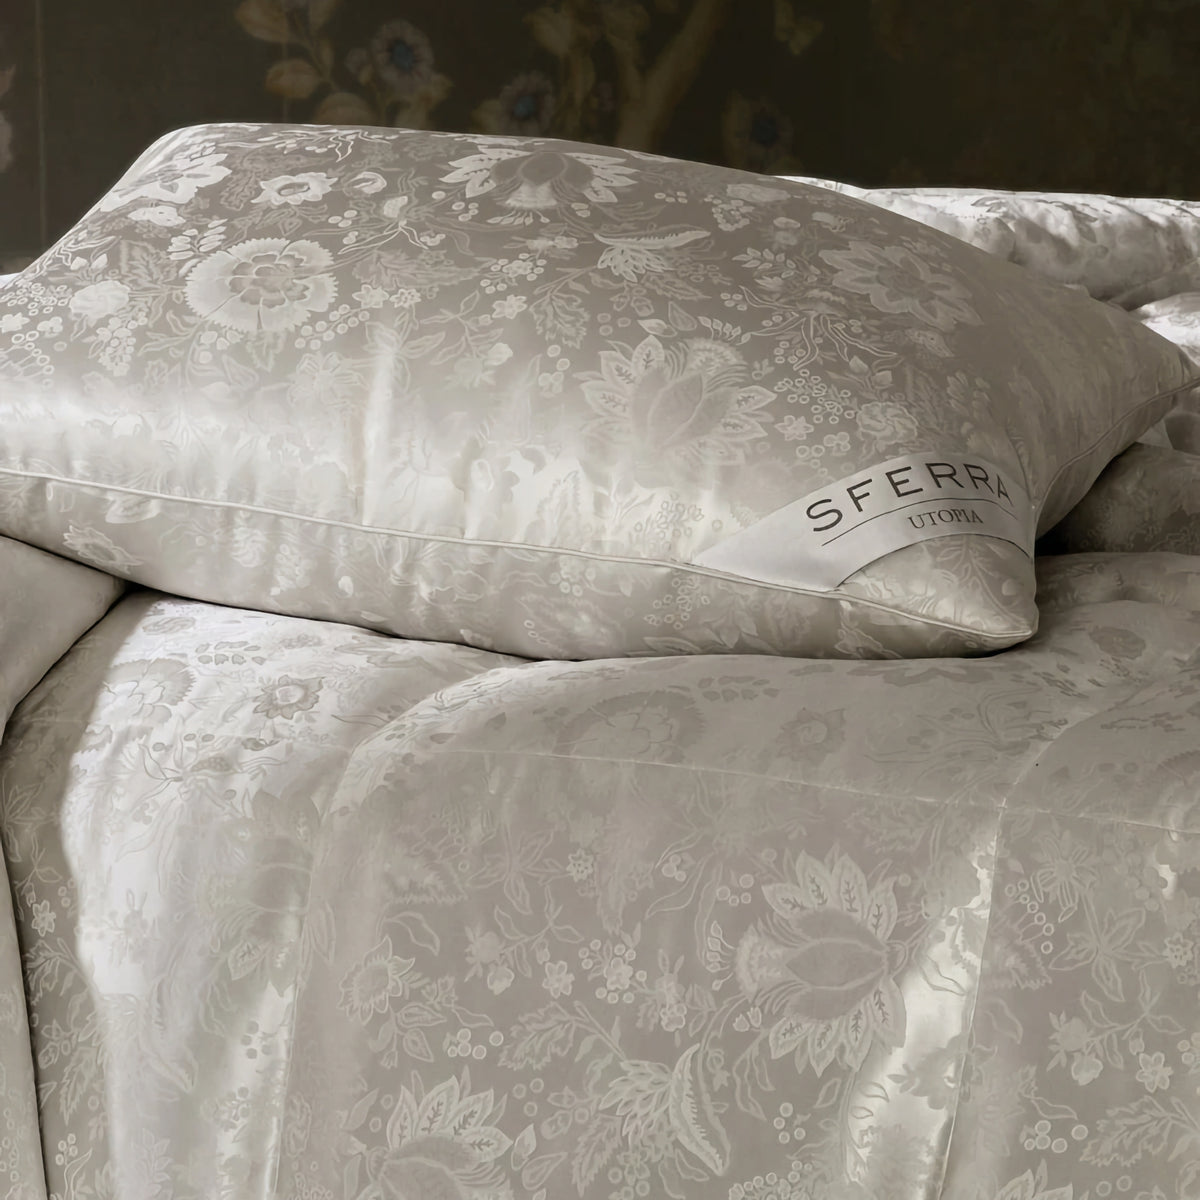 Sferra Utopia Duvet Insert bedding and Pillows on top